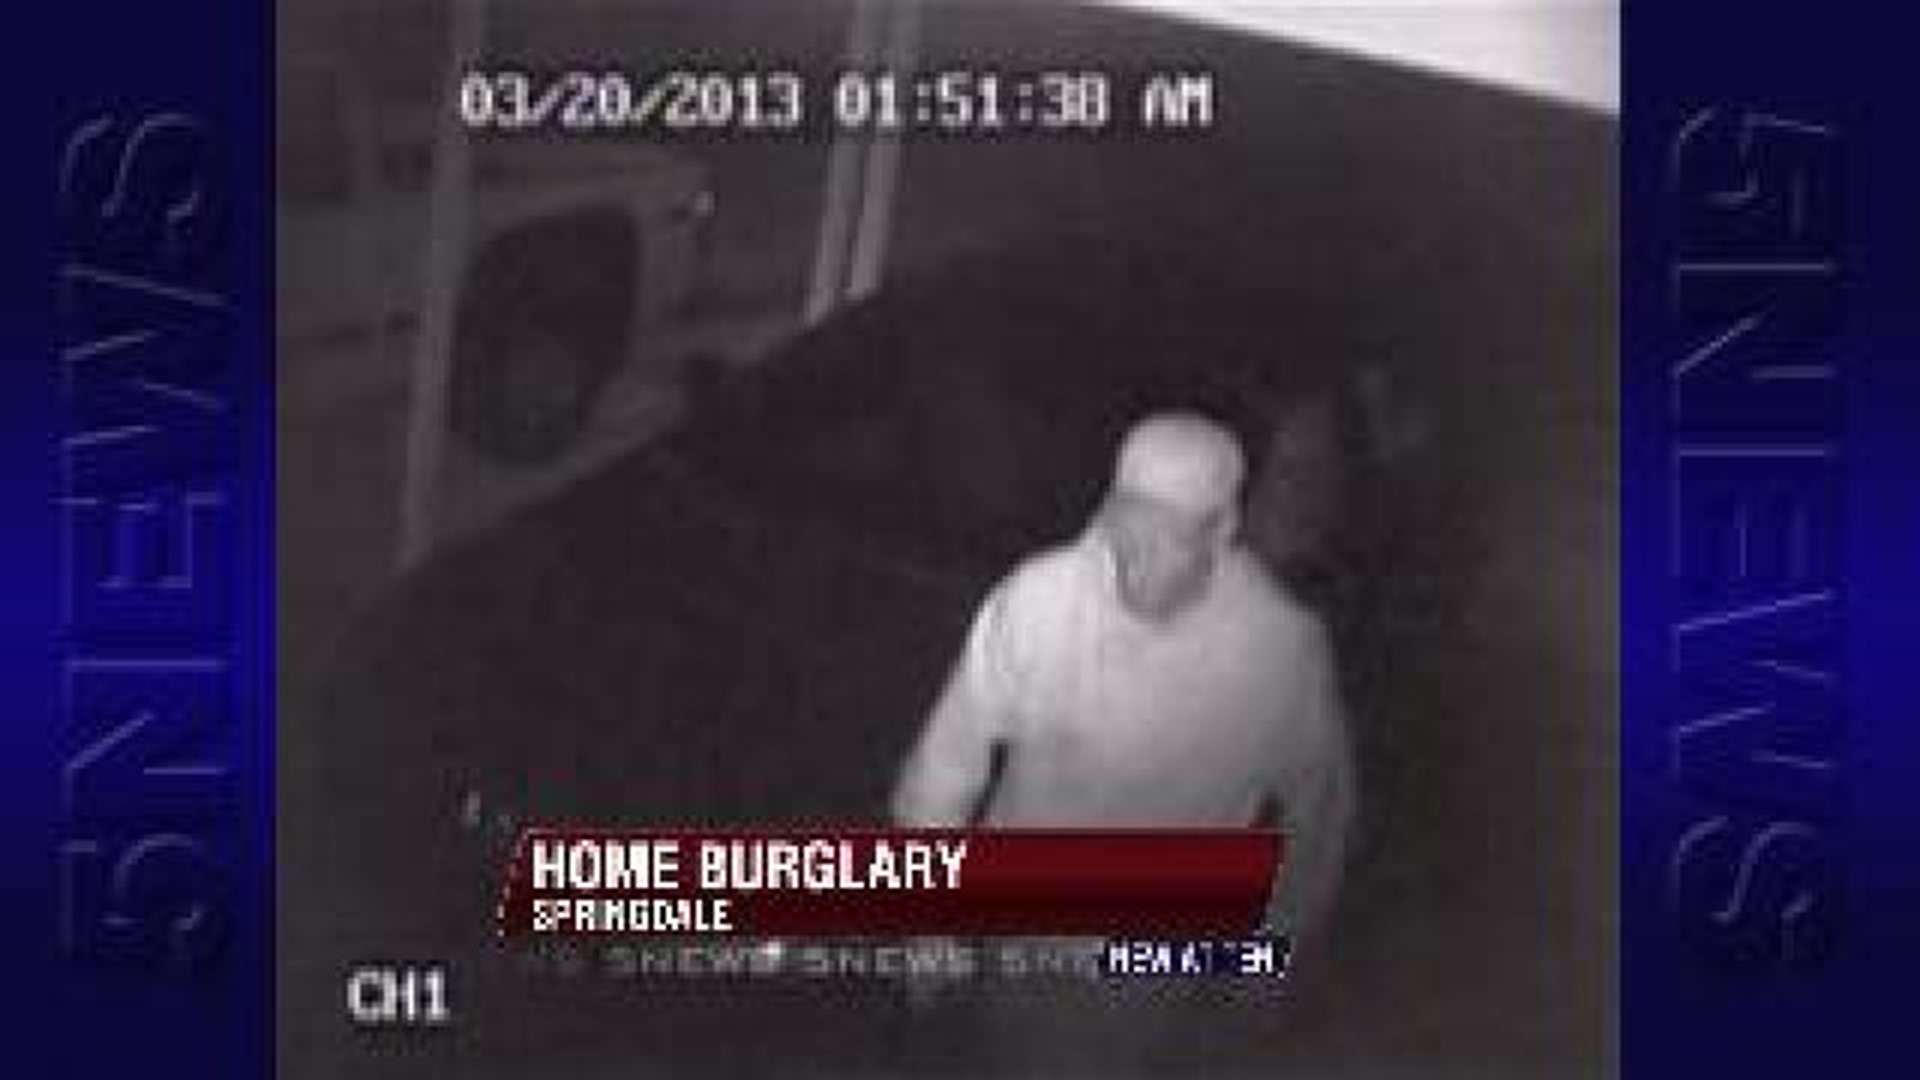 Burglary Caught On Tape